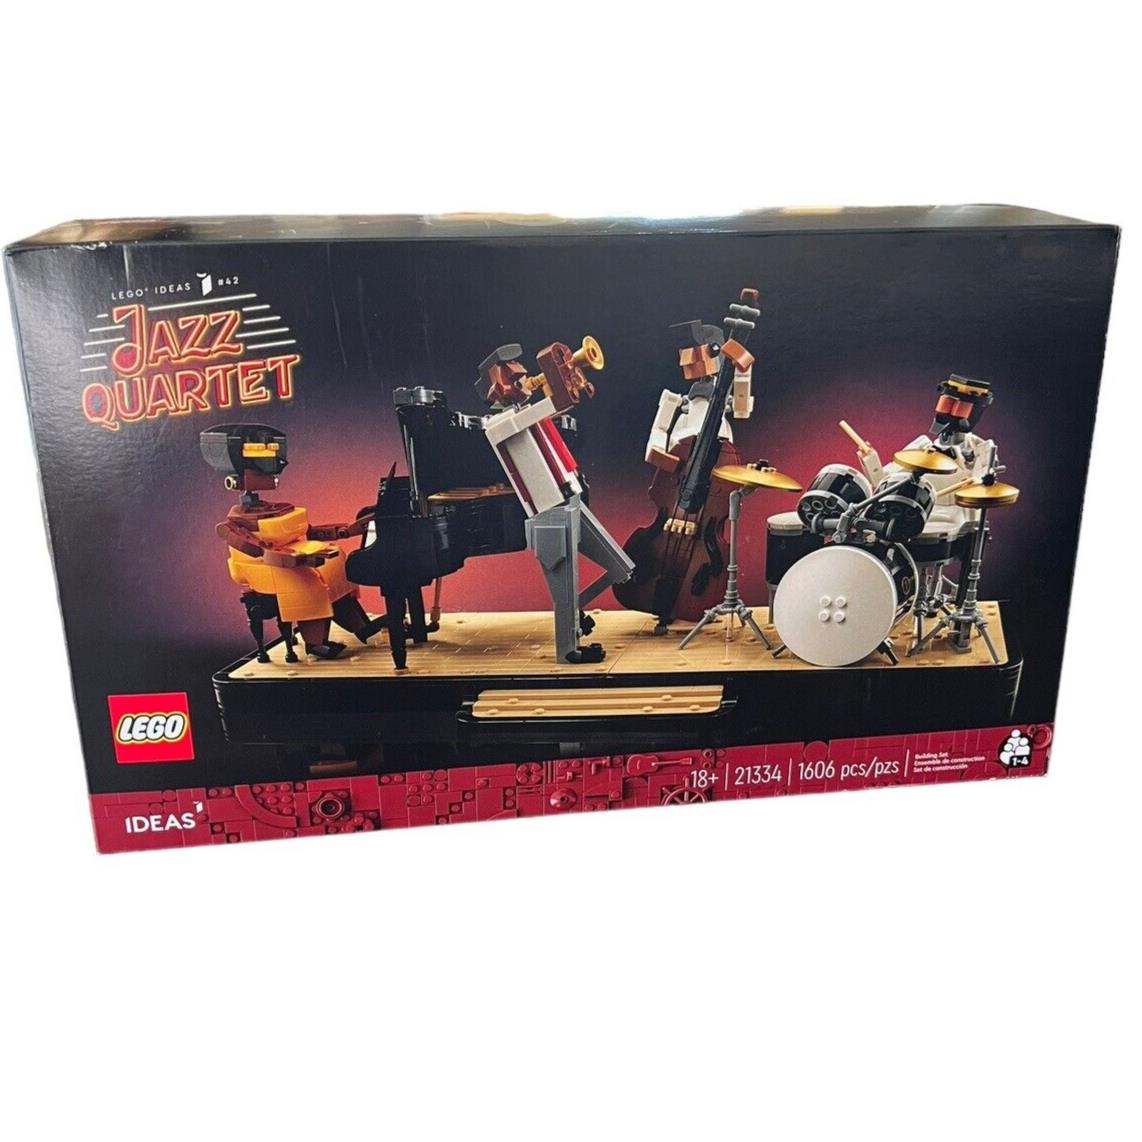 Lego Ideas: Jazz Quartet 21334 Kit